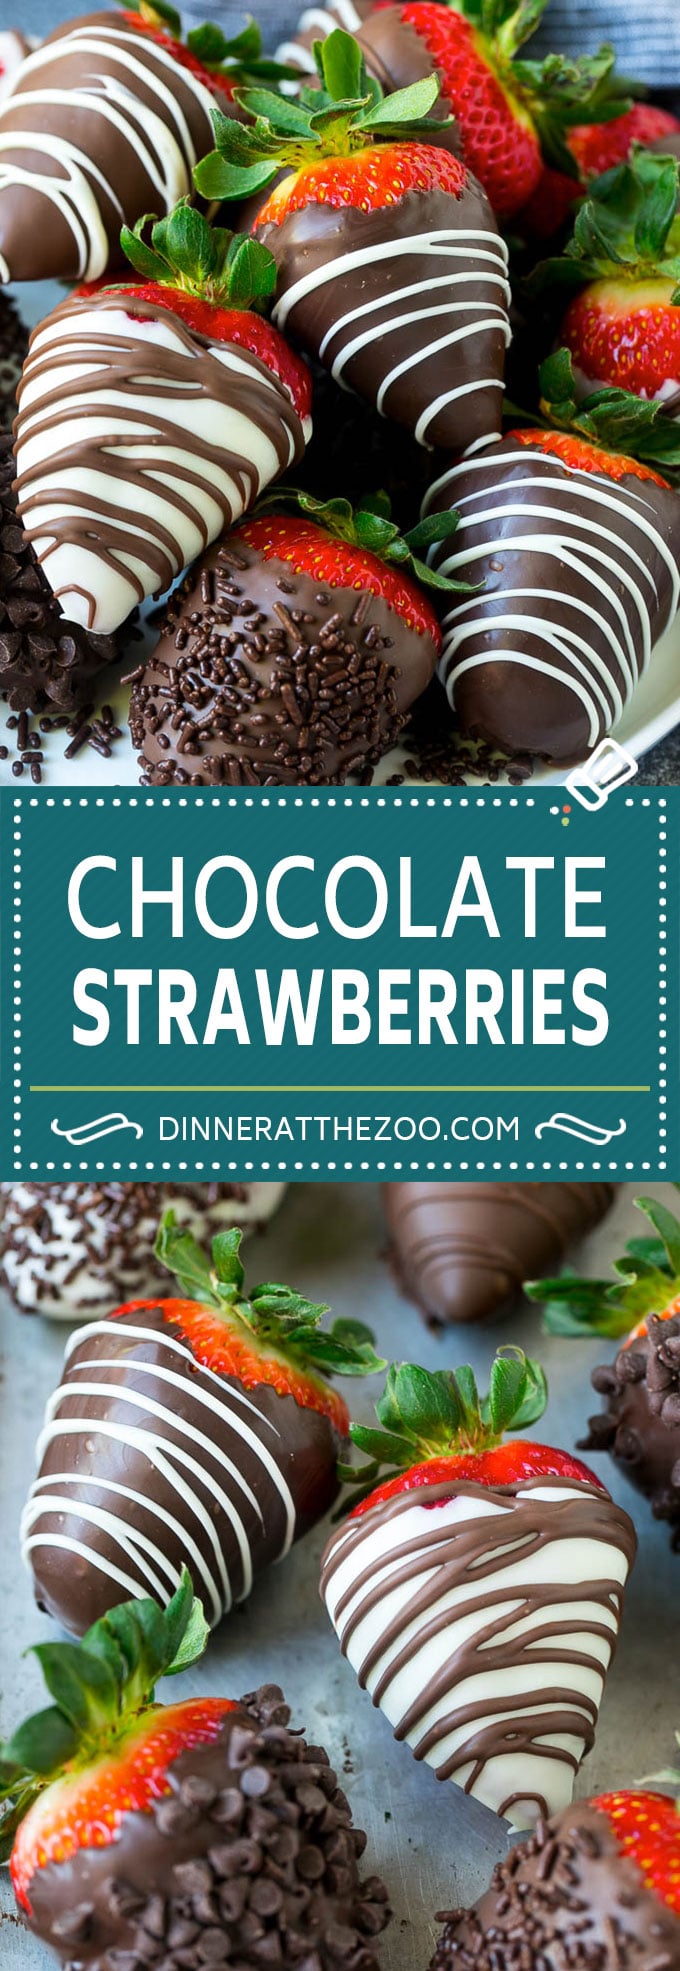 Chocolate Covered Strawberries Recipe | Chocolate Dipped Strawberries | Strawberry Dessert #chocolate #strawberry #glutenfree #dessert #dinneratthezoo